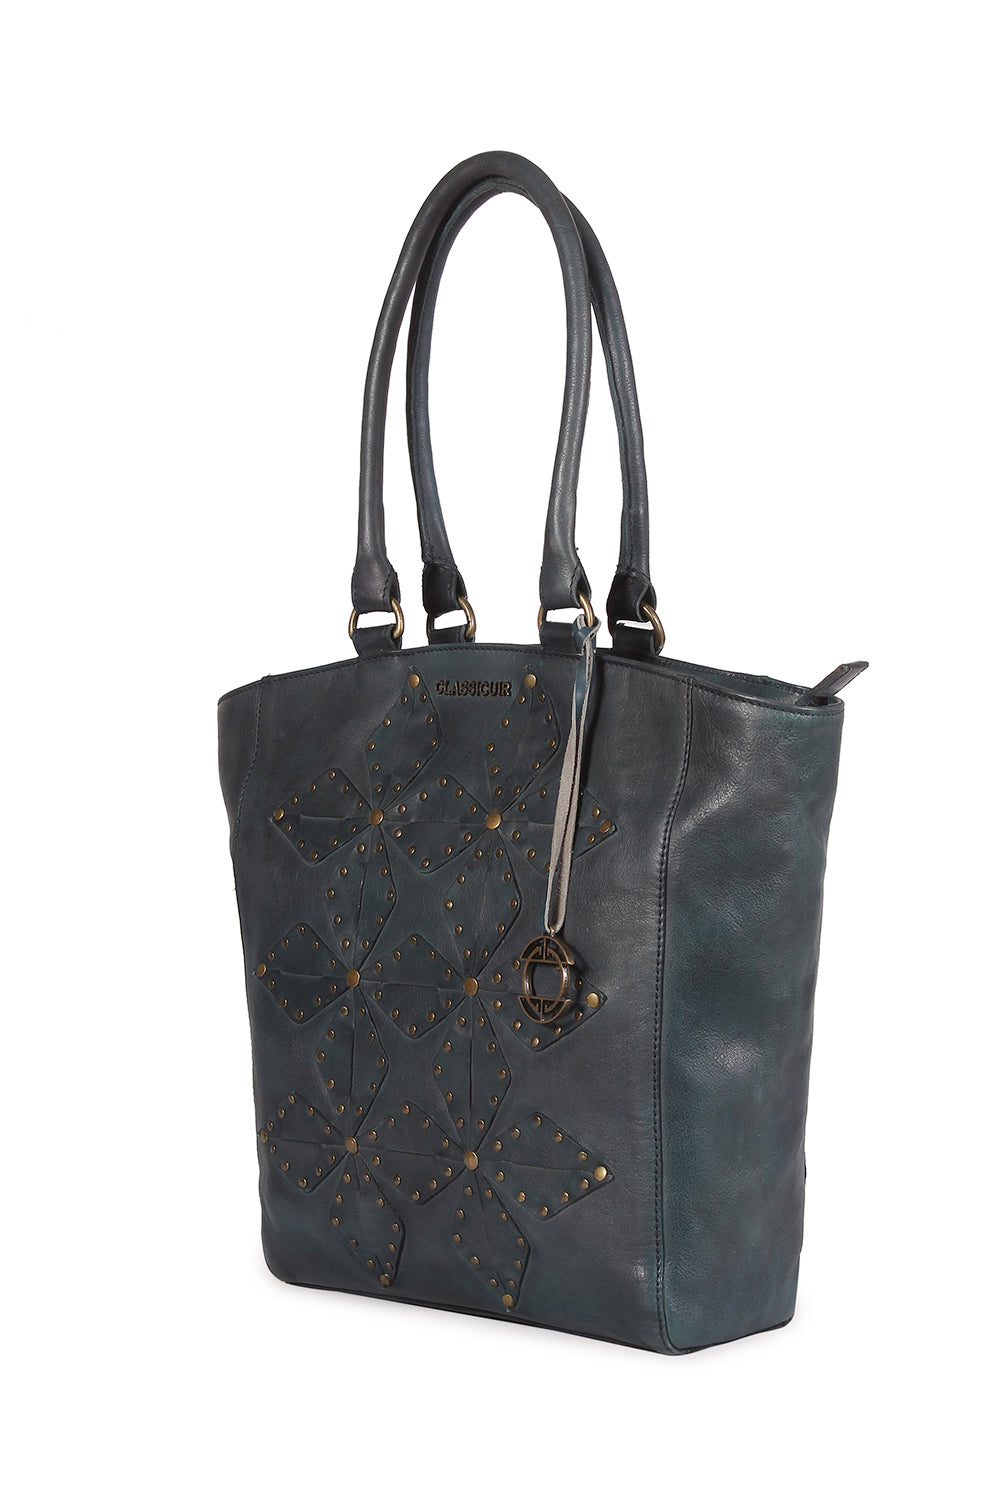 Rouen Diamond Flowered Tote Bag